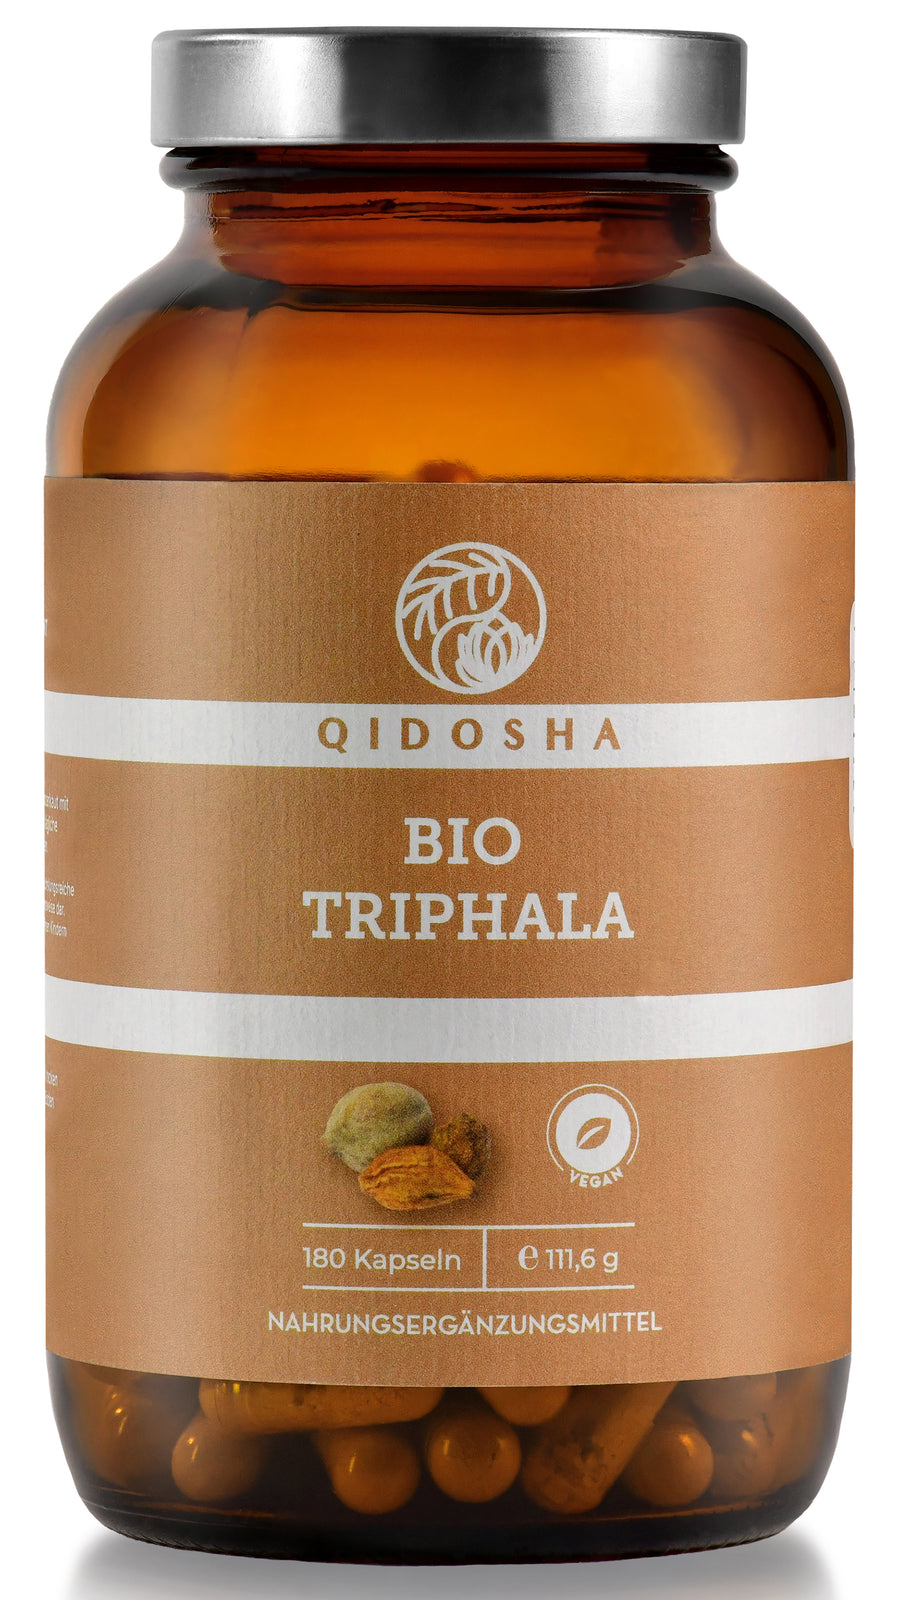 Organic triphala in a jar